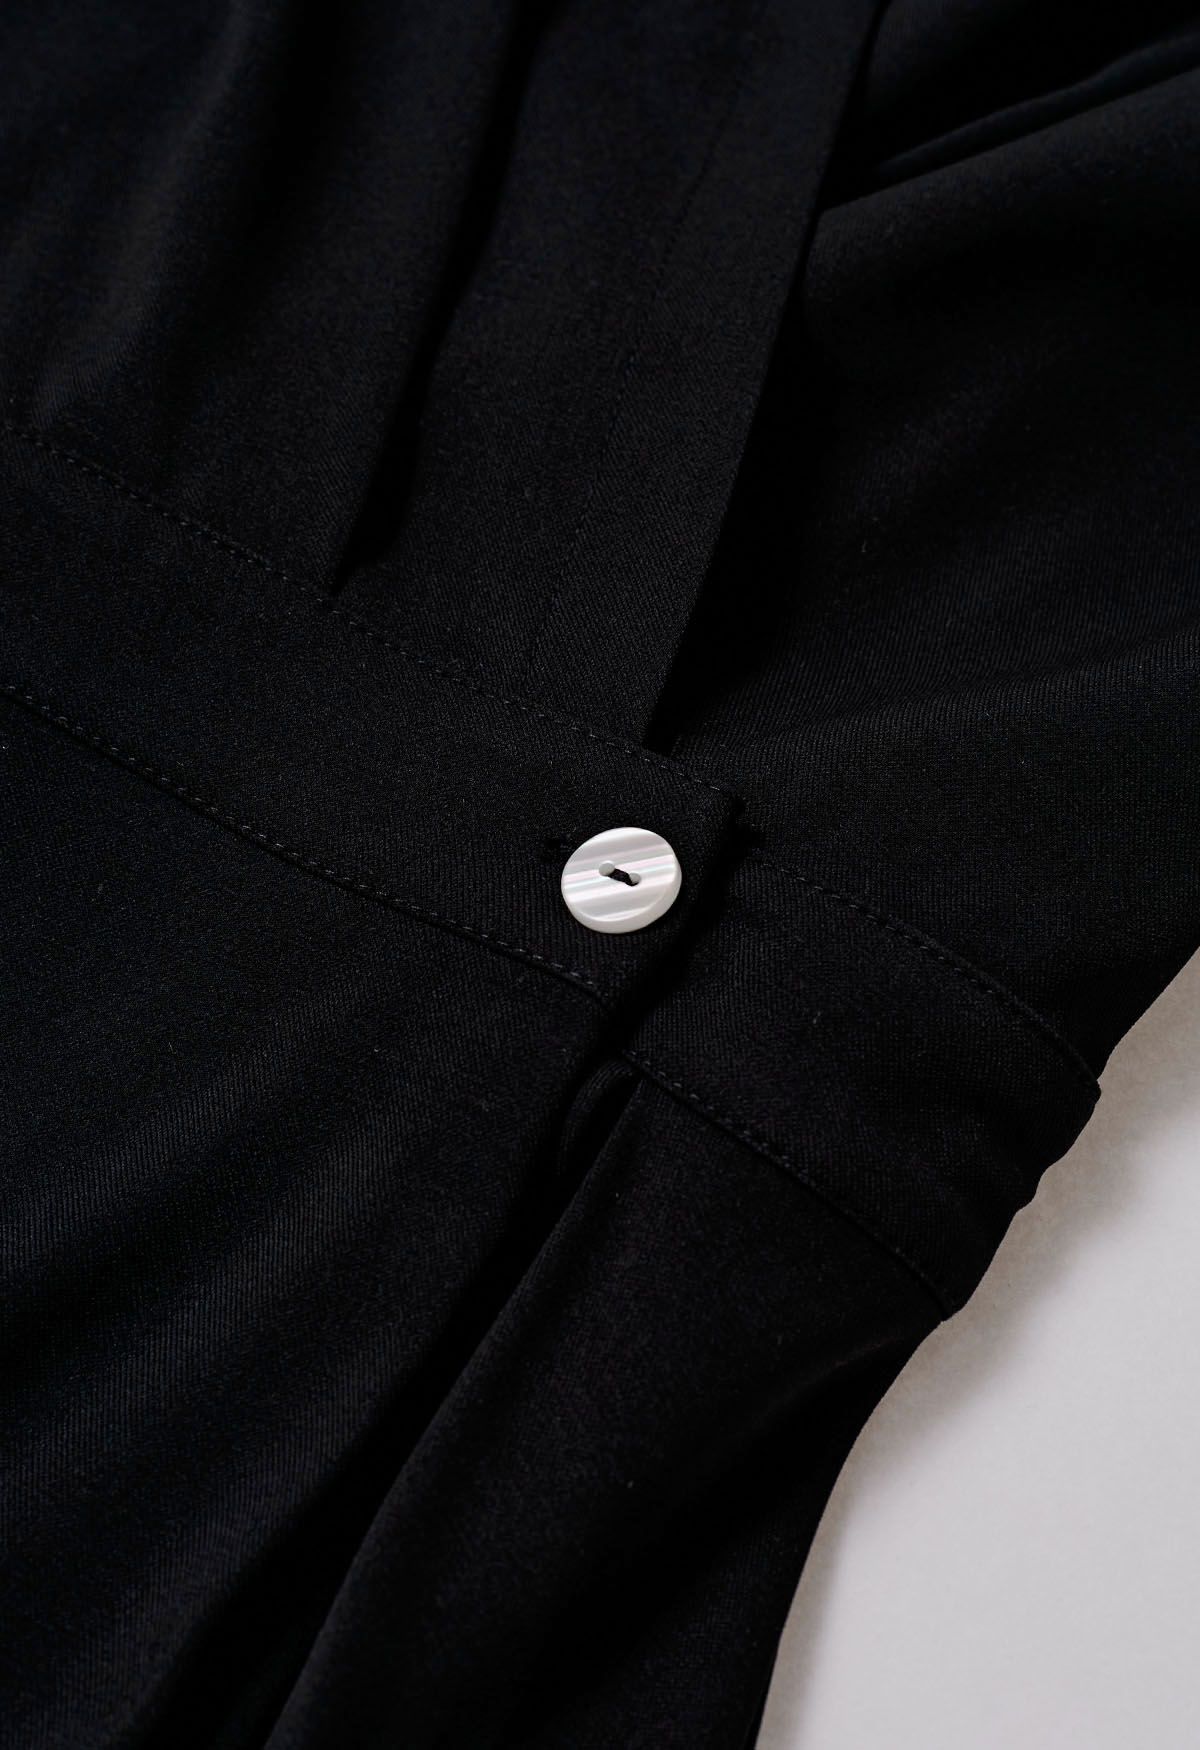 Buttoned Wrap Midi Shirt Dress in Black